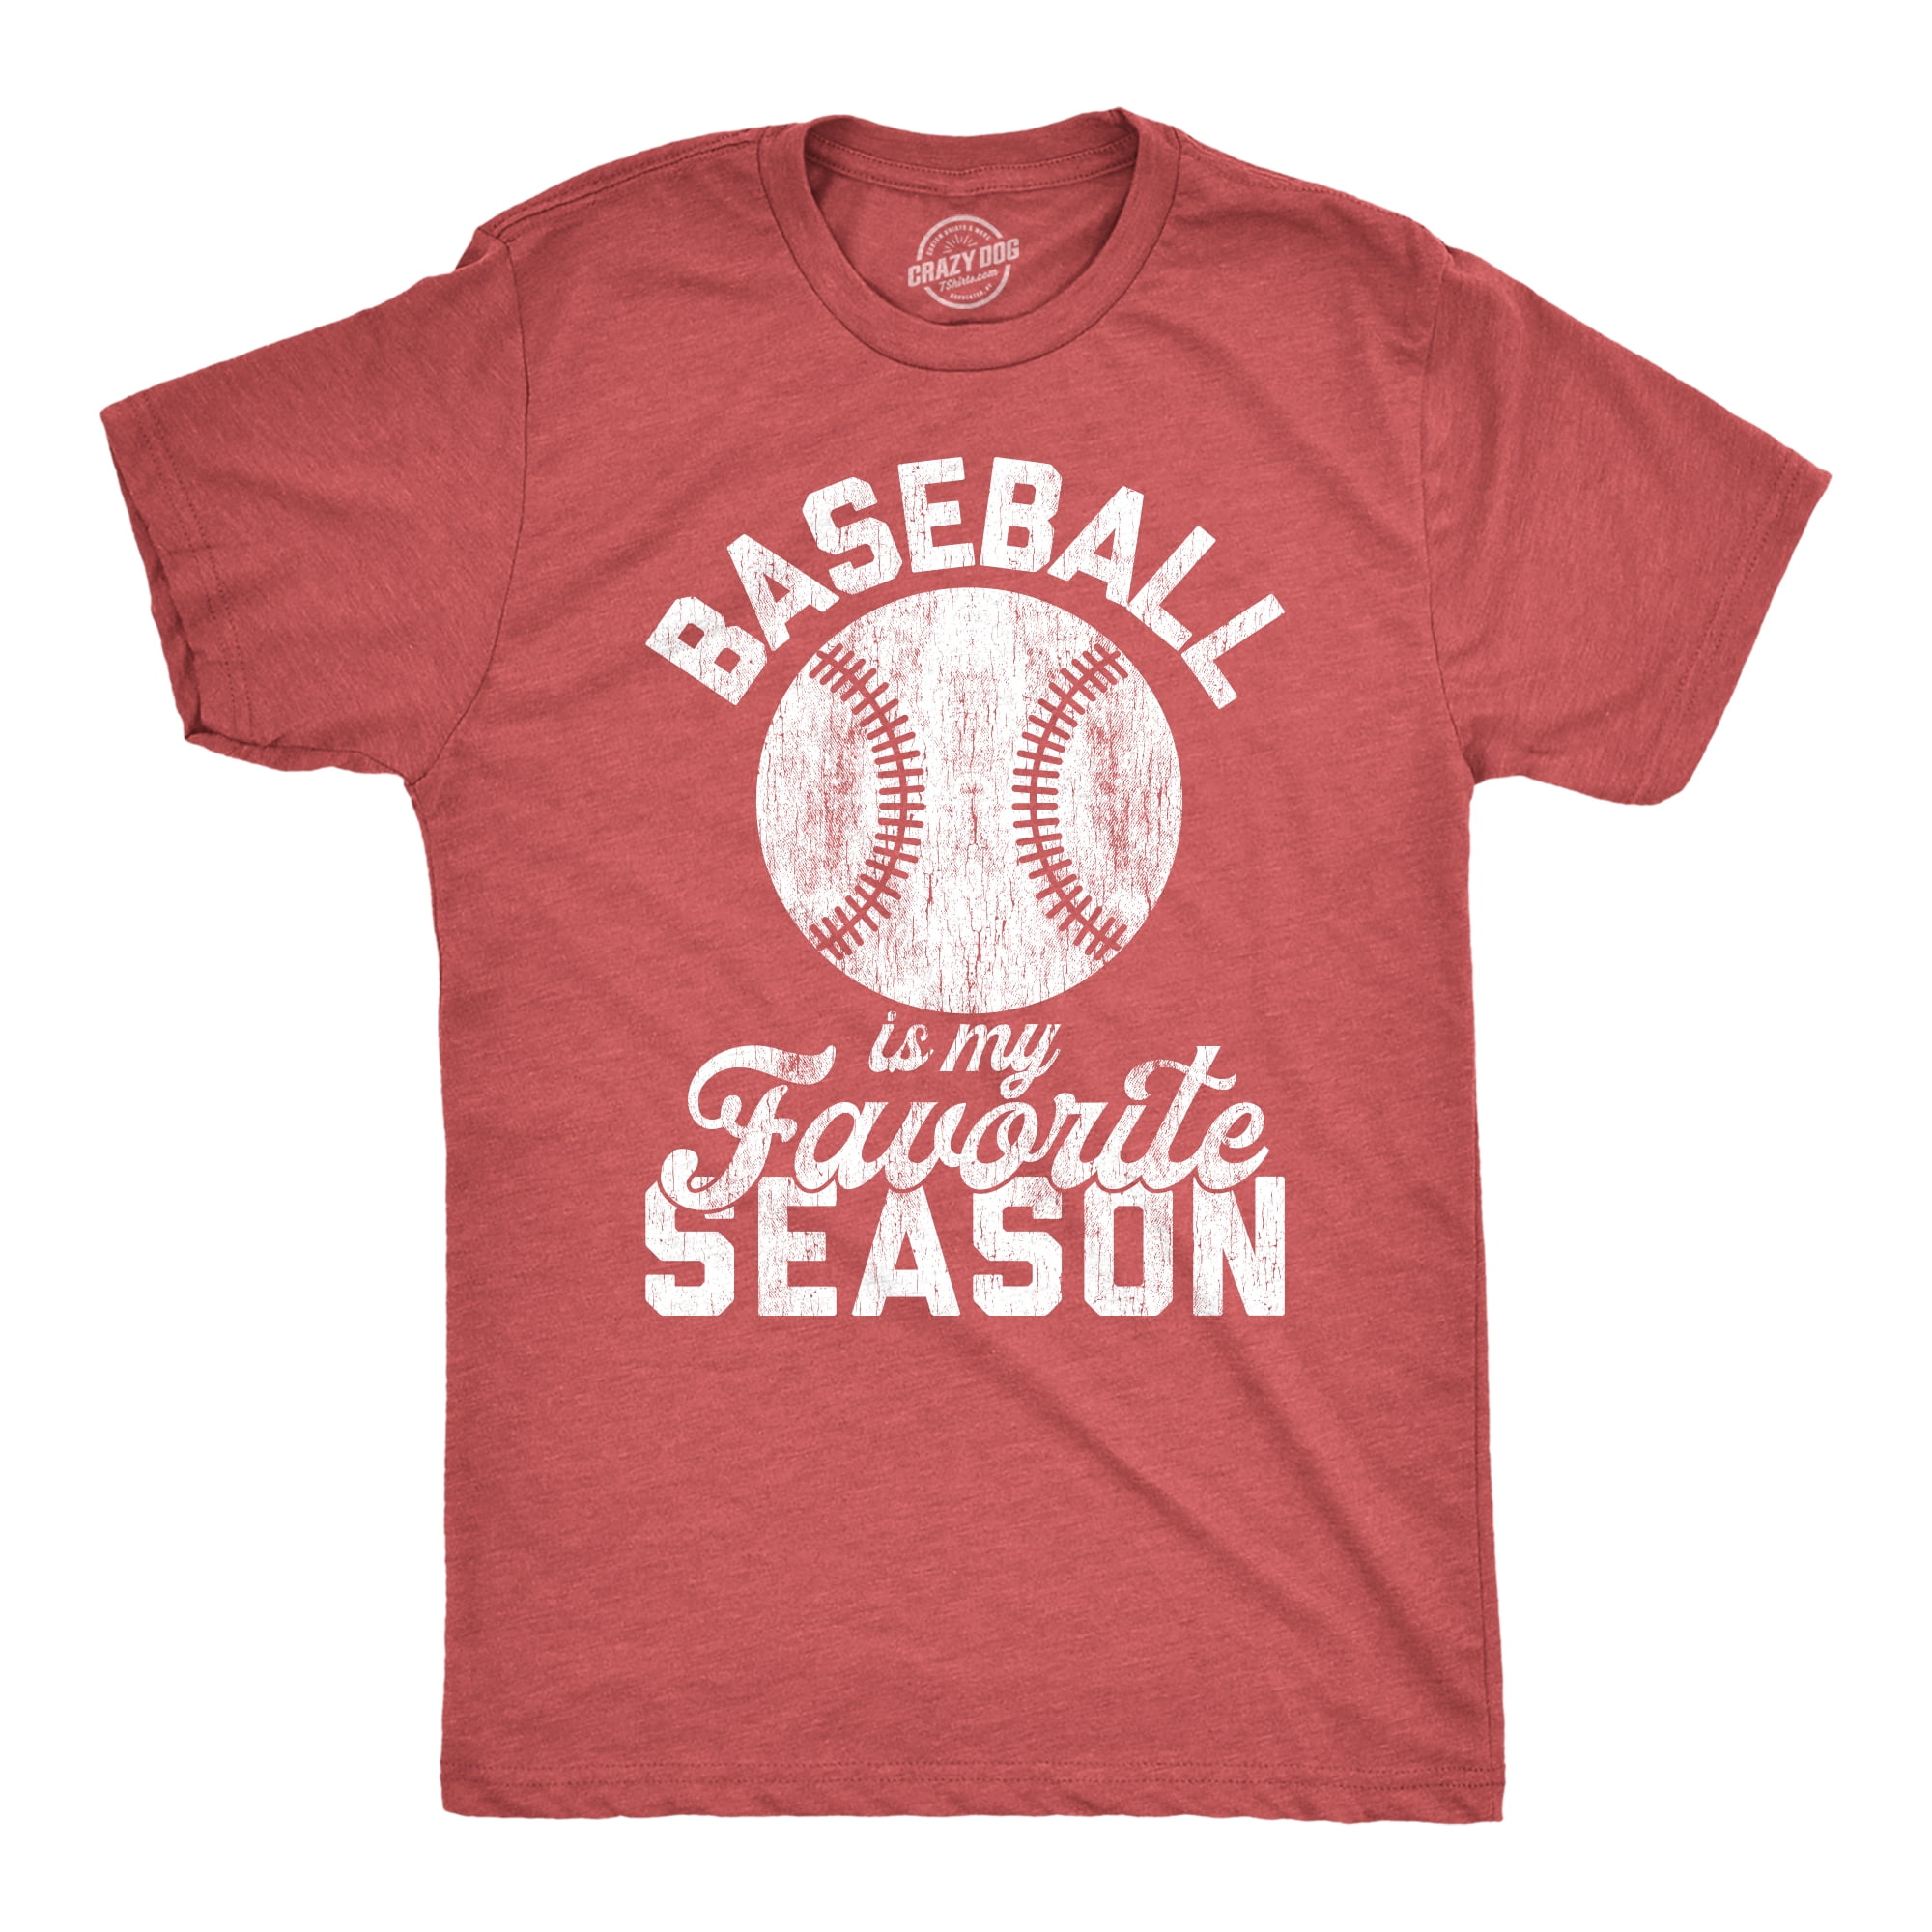 Crazy Dog Tshirts Mens Baseball Is My Favorite Season Tshirt Funny Summer Sports Softball Novelty Tee, Red